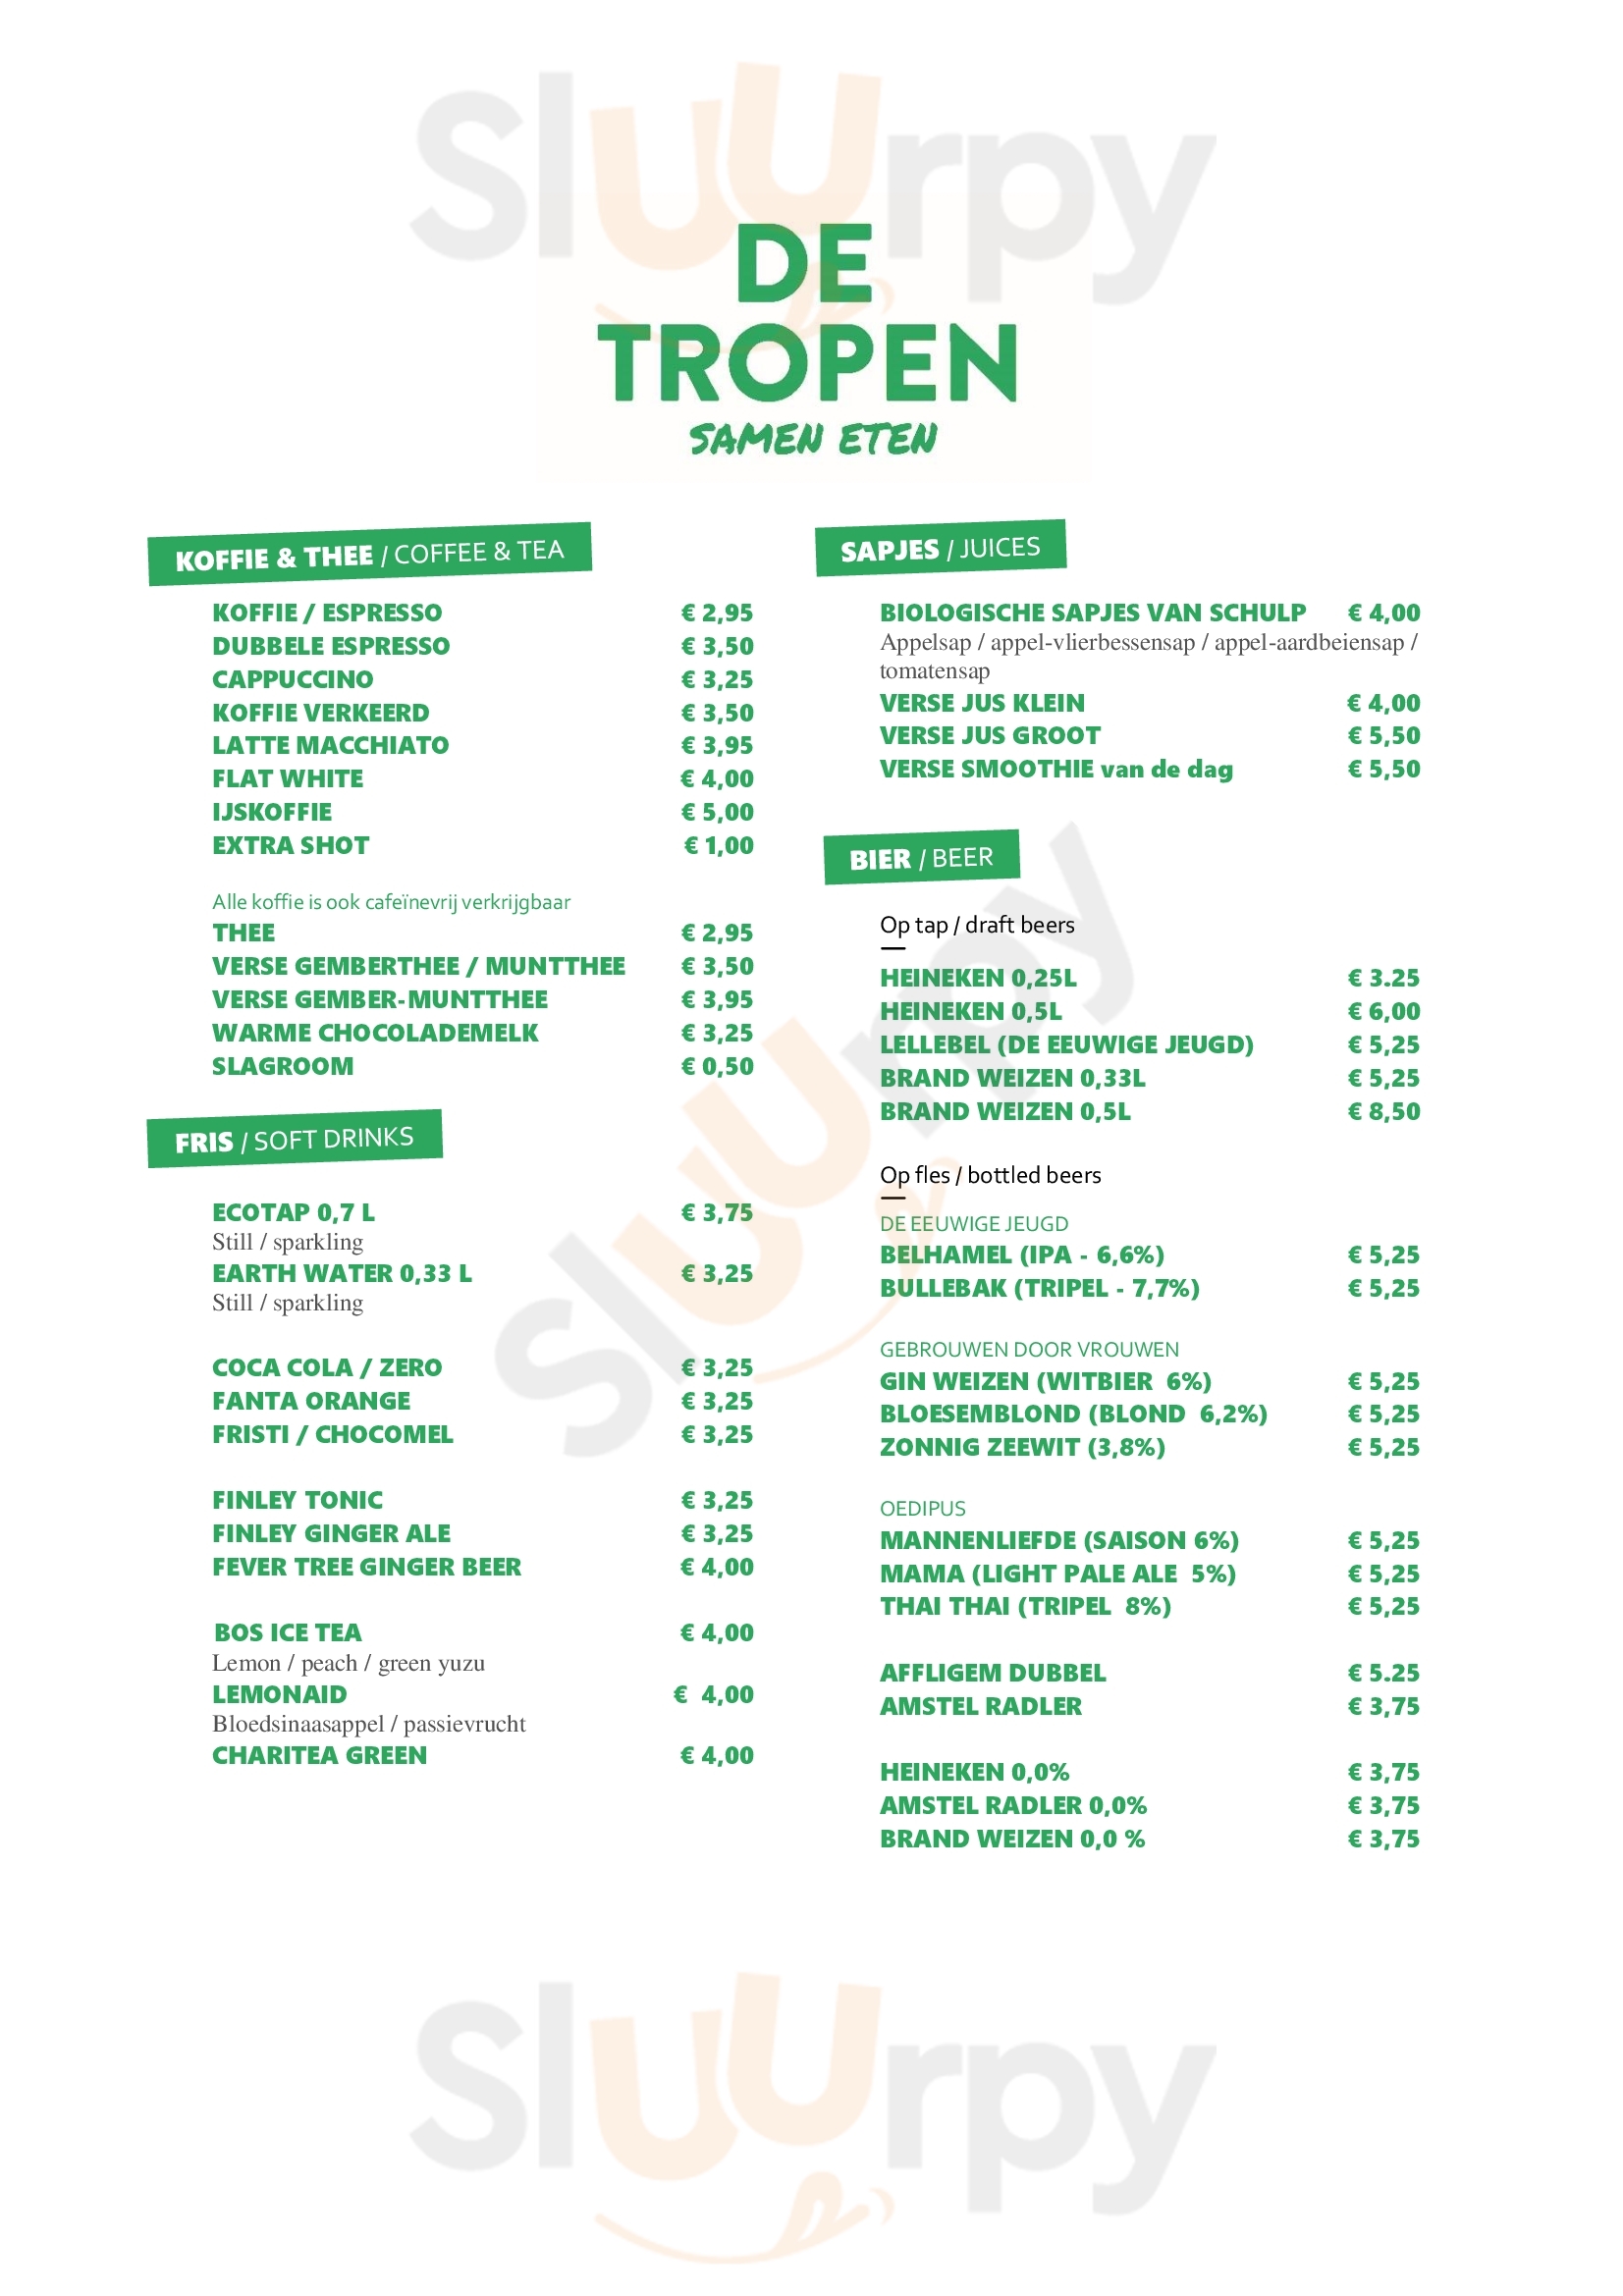 De Tropen - Cafe & Restaurant Amsterdam Menu - 1